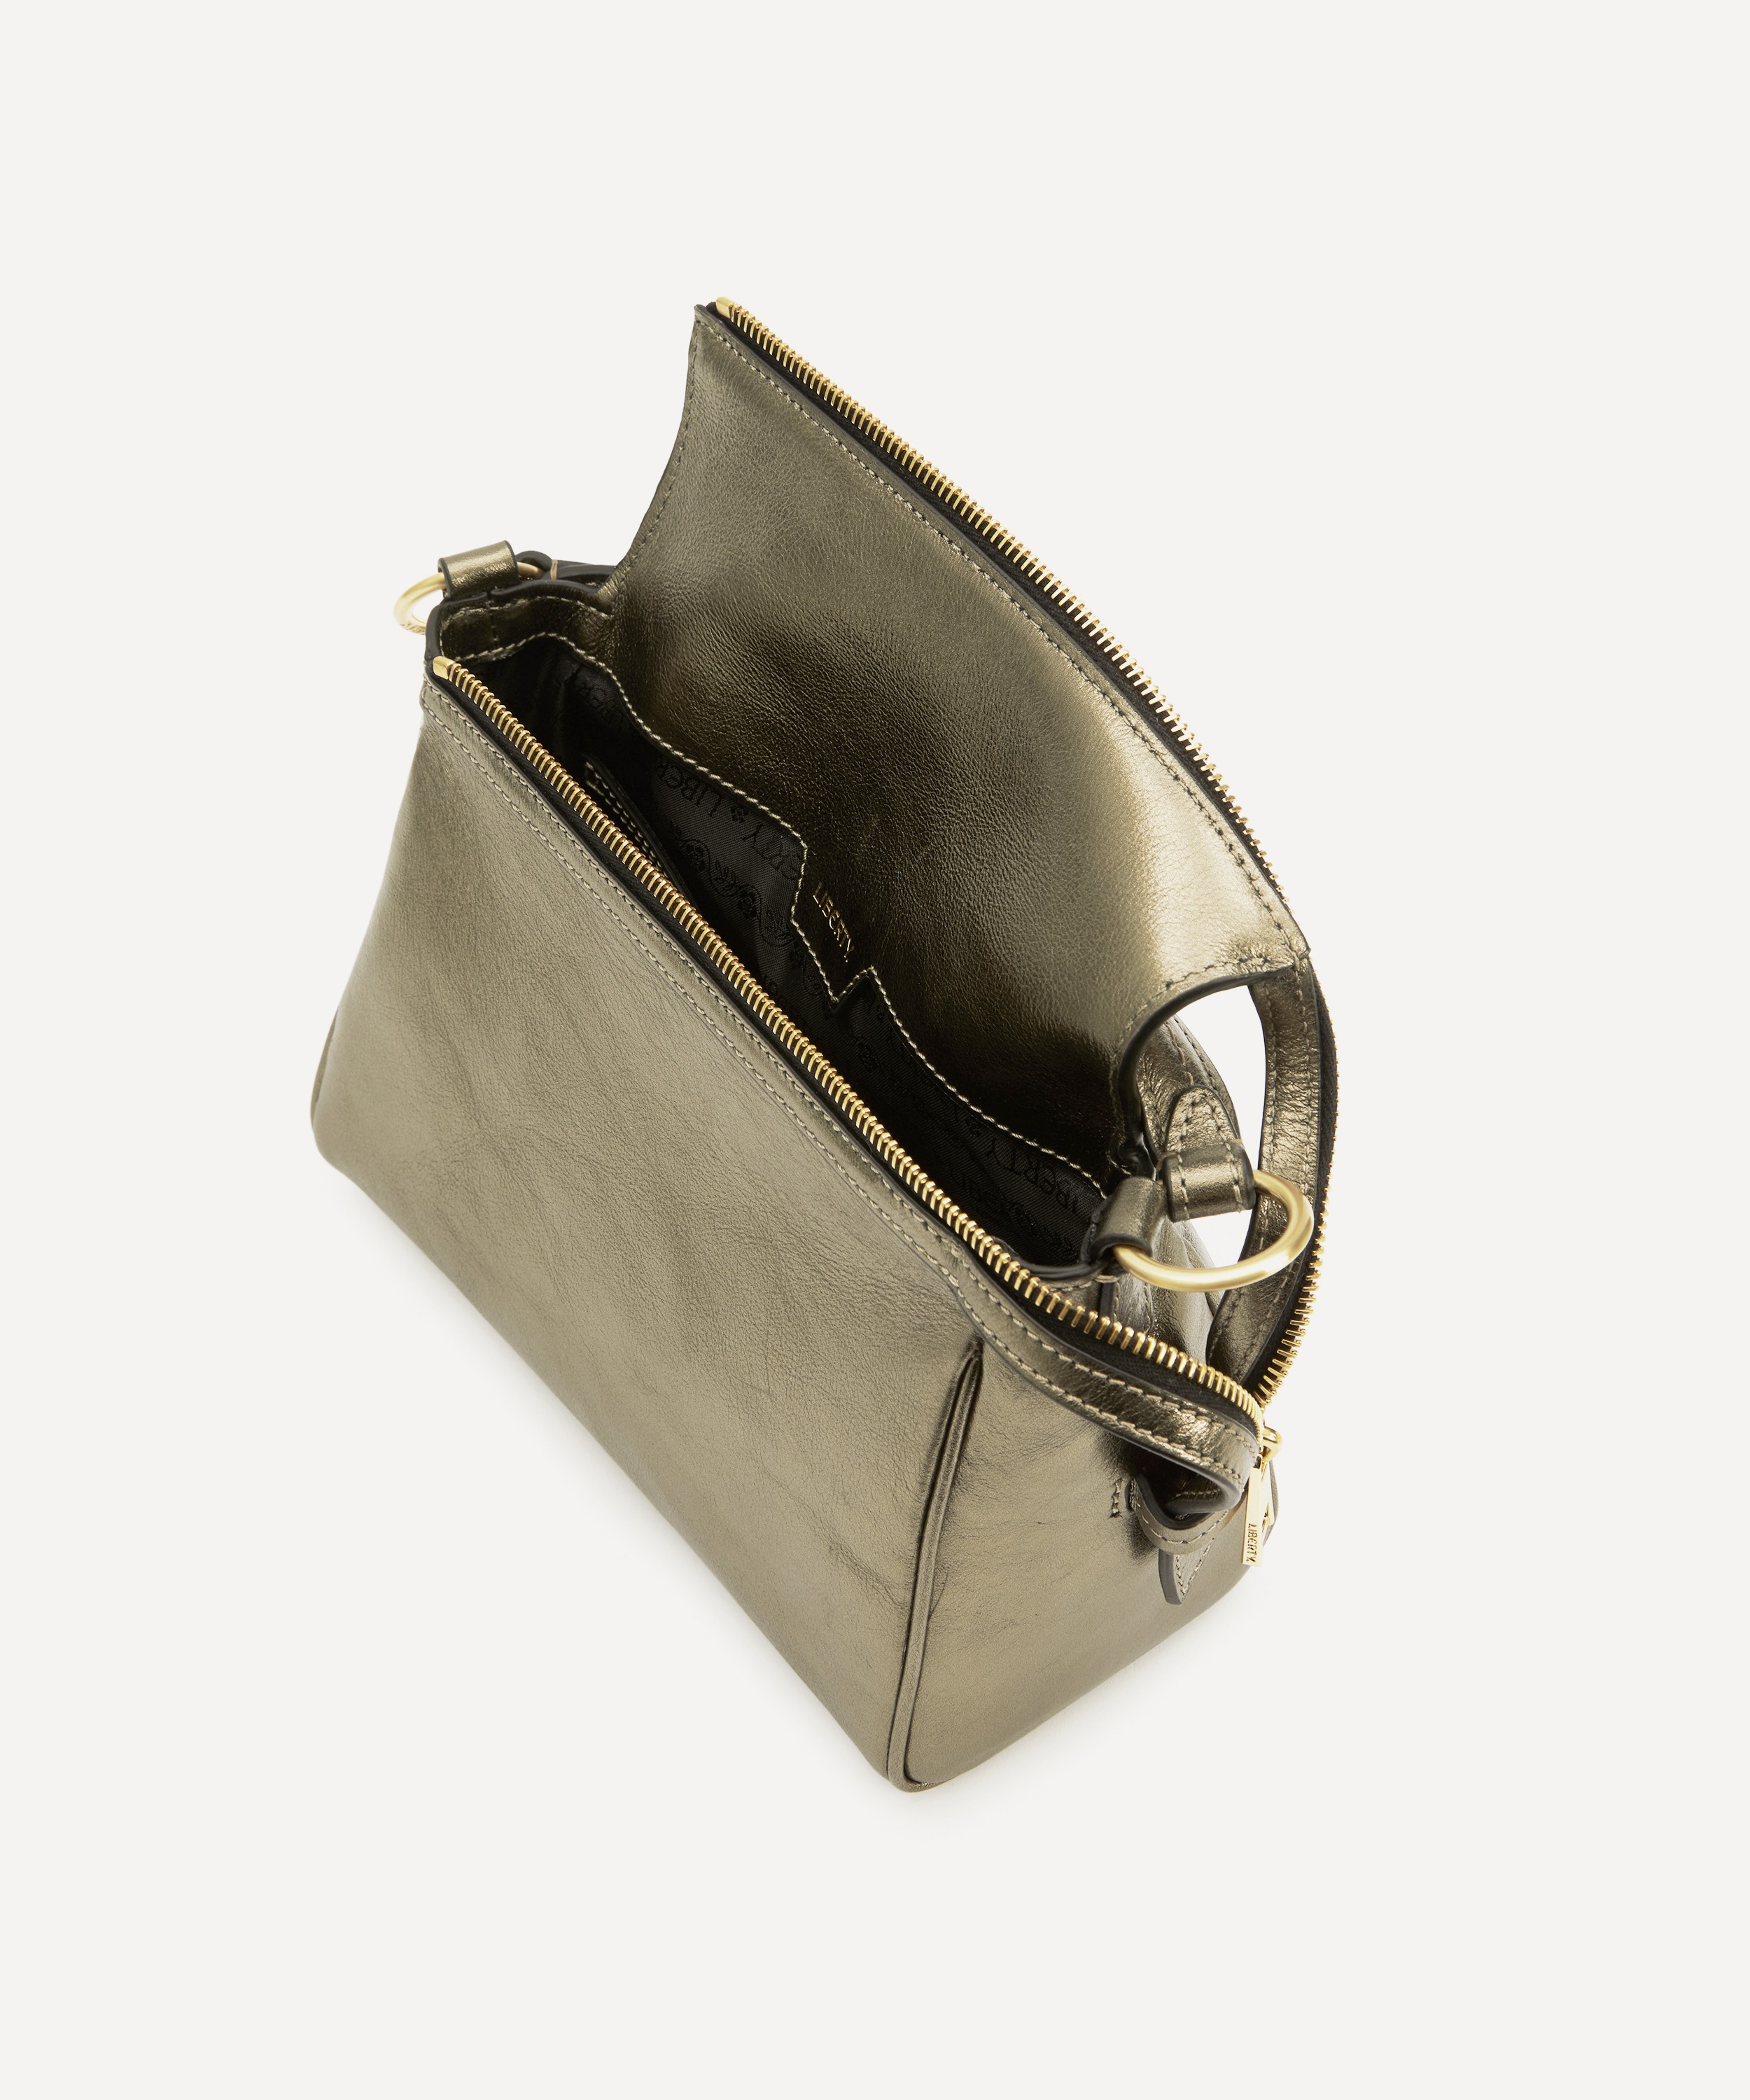 Liberty Bags FT007M Metallic Can Holder - Metallic Gold - Os